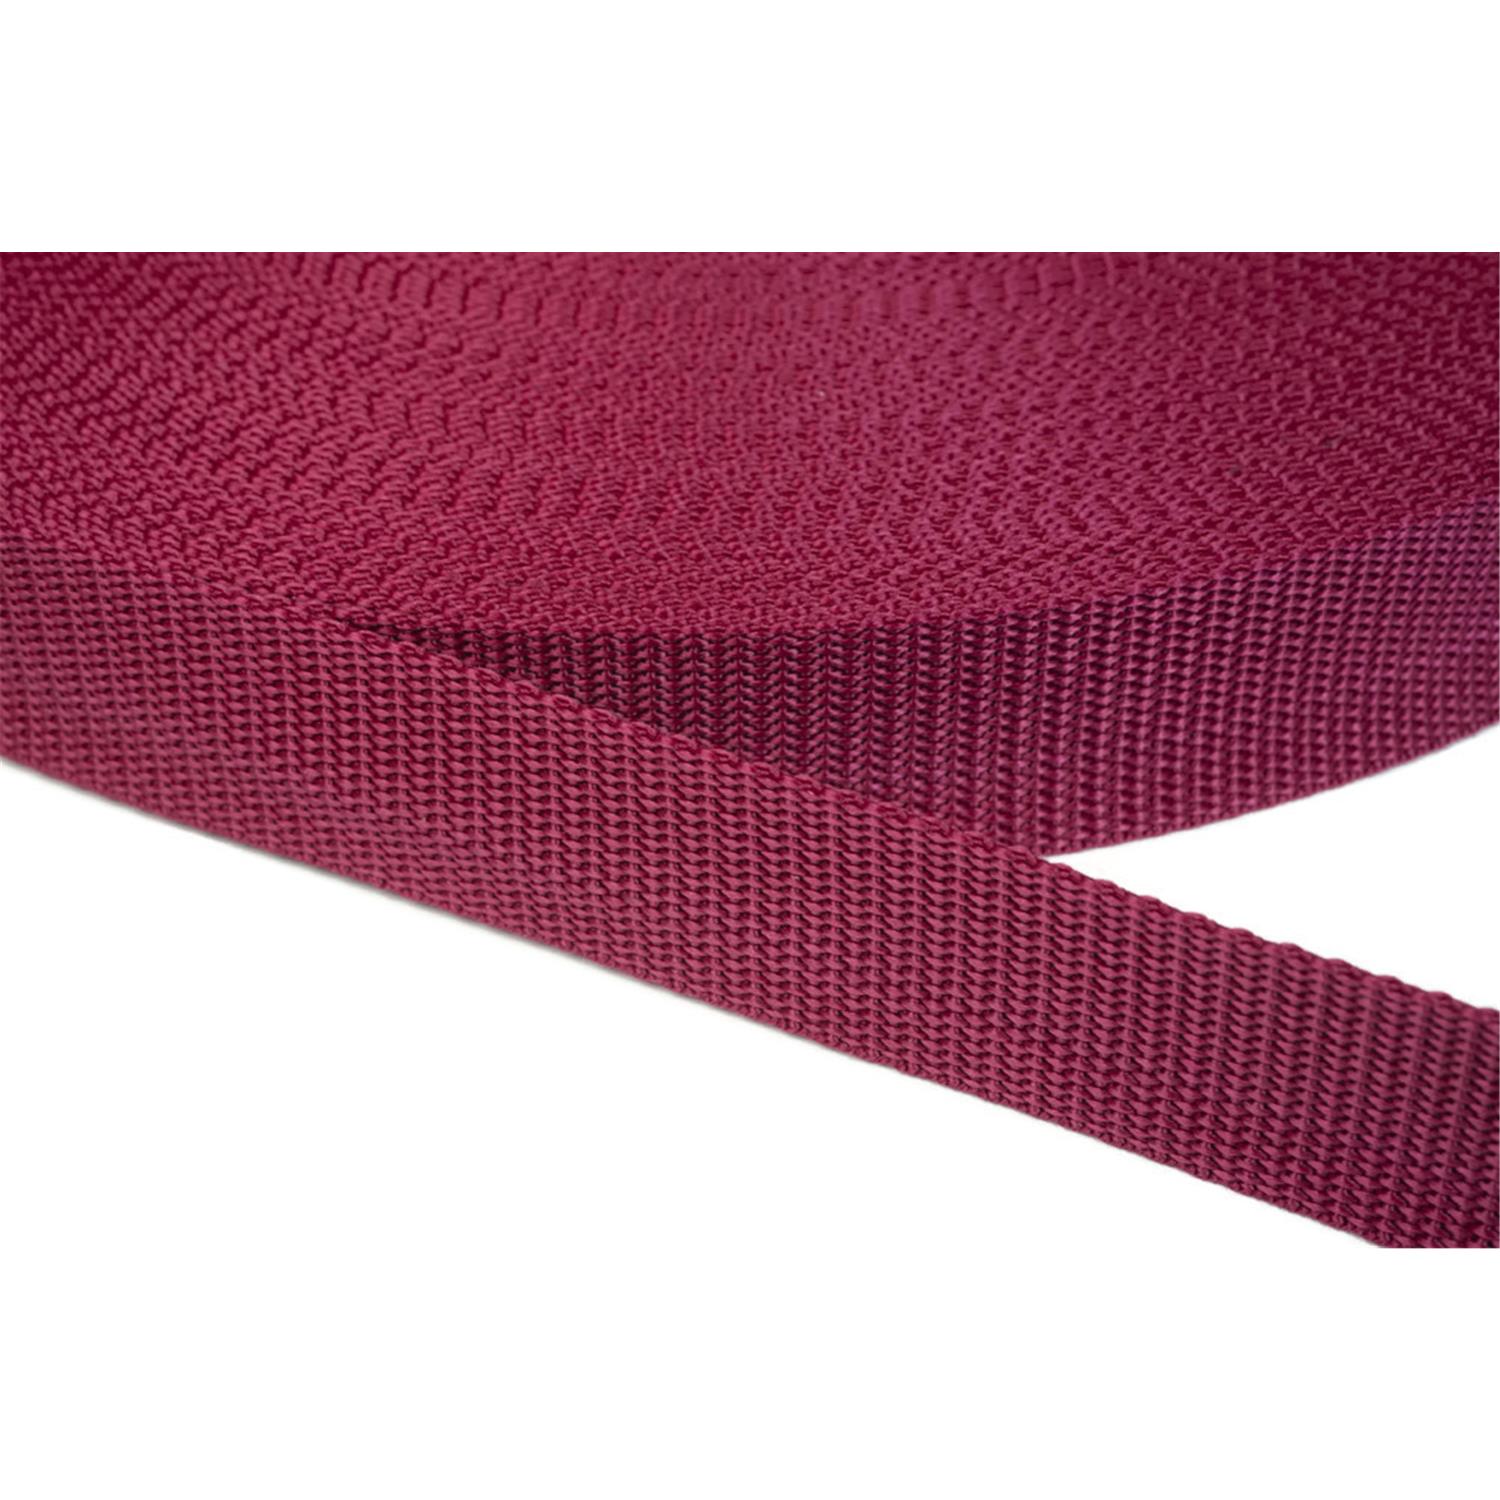 Gurtband 15mm breit aus Polypropylen in 41 Farben 21 - dunkelrot 50 Meter